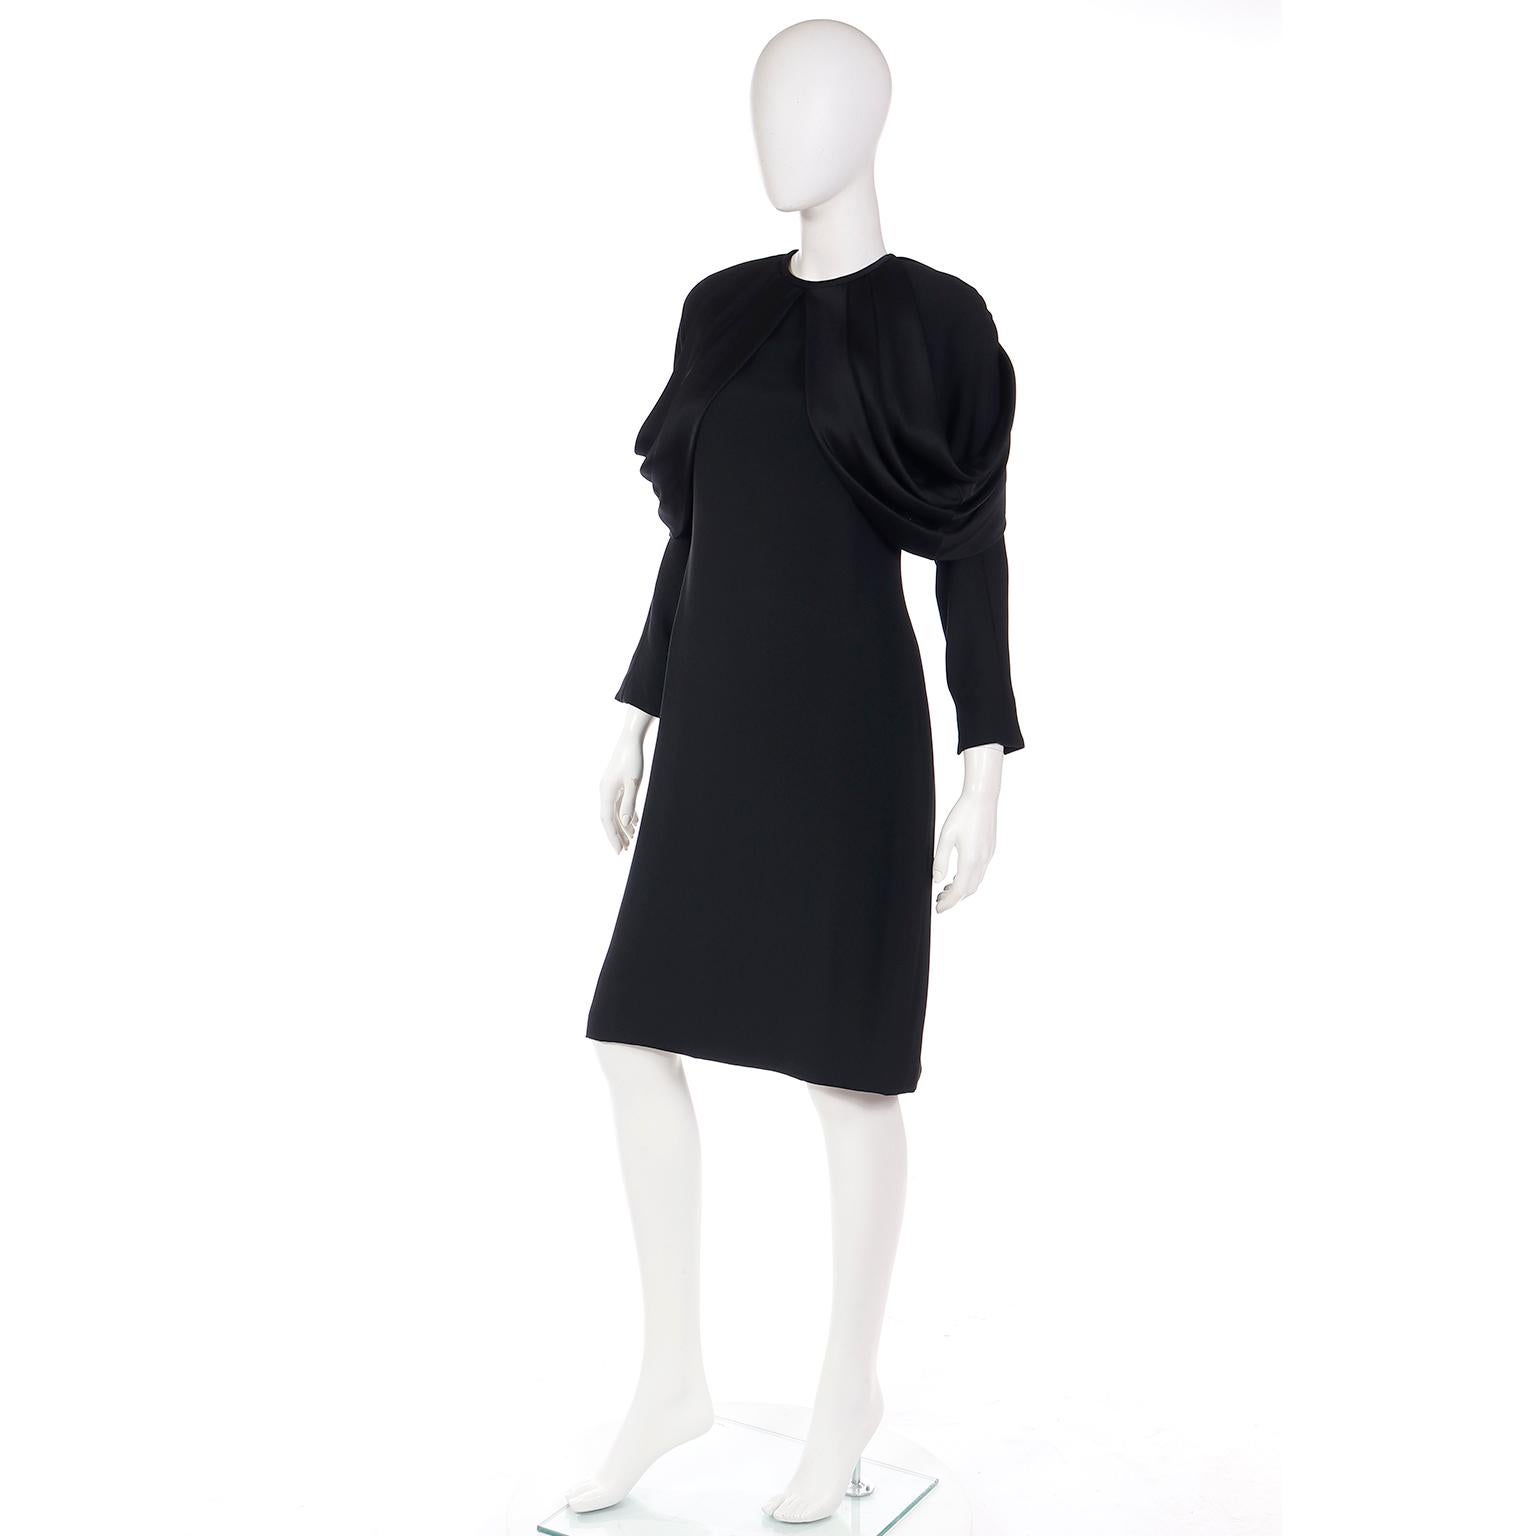 Adele Simpson Vintage Black Crepe Dress With Dramatic Satin Drape For Sale 1